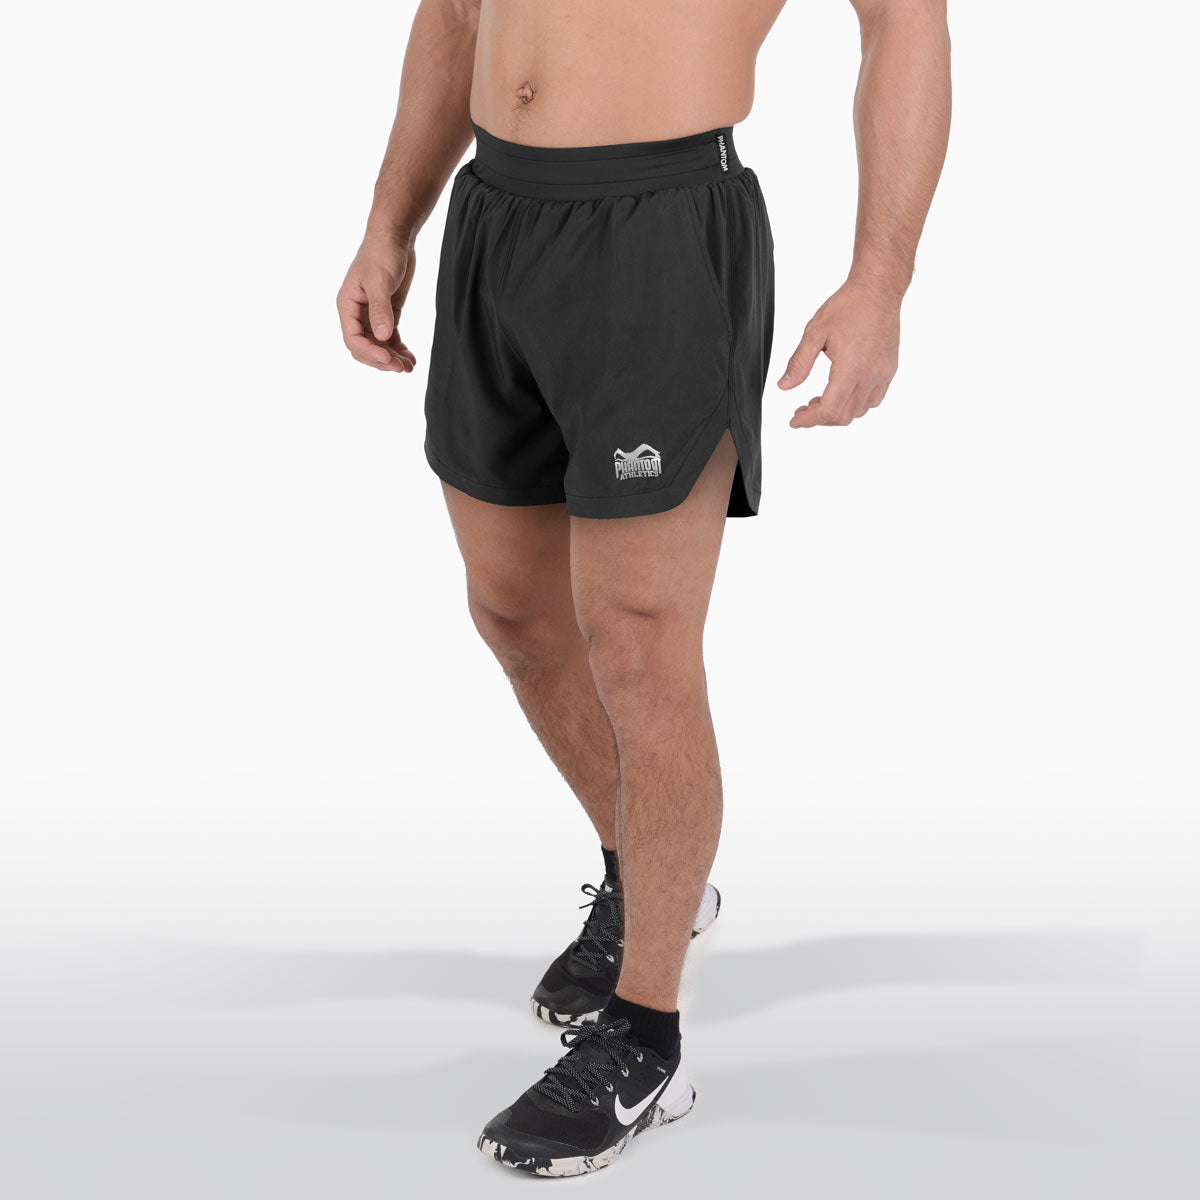 Laser training shorts - black